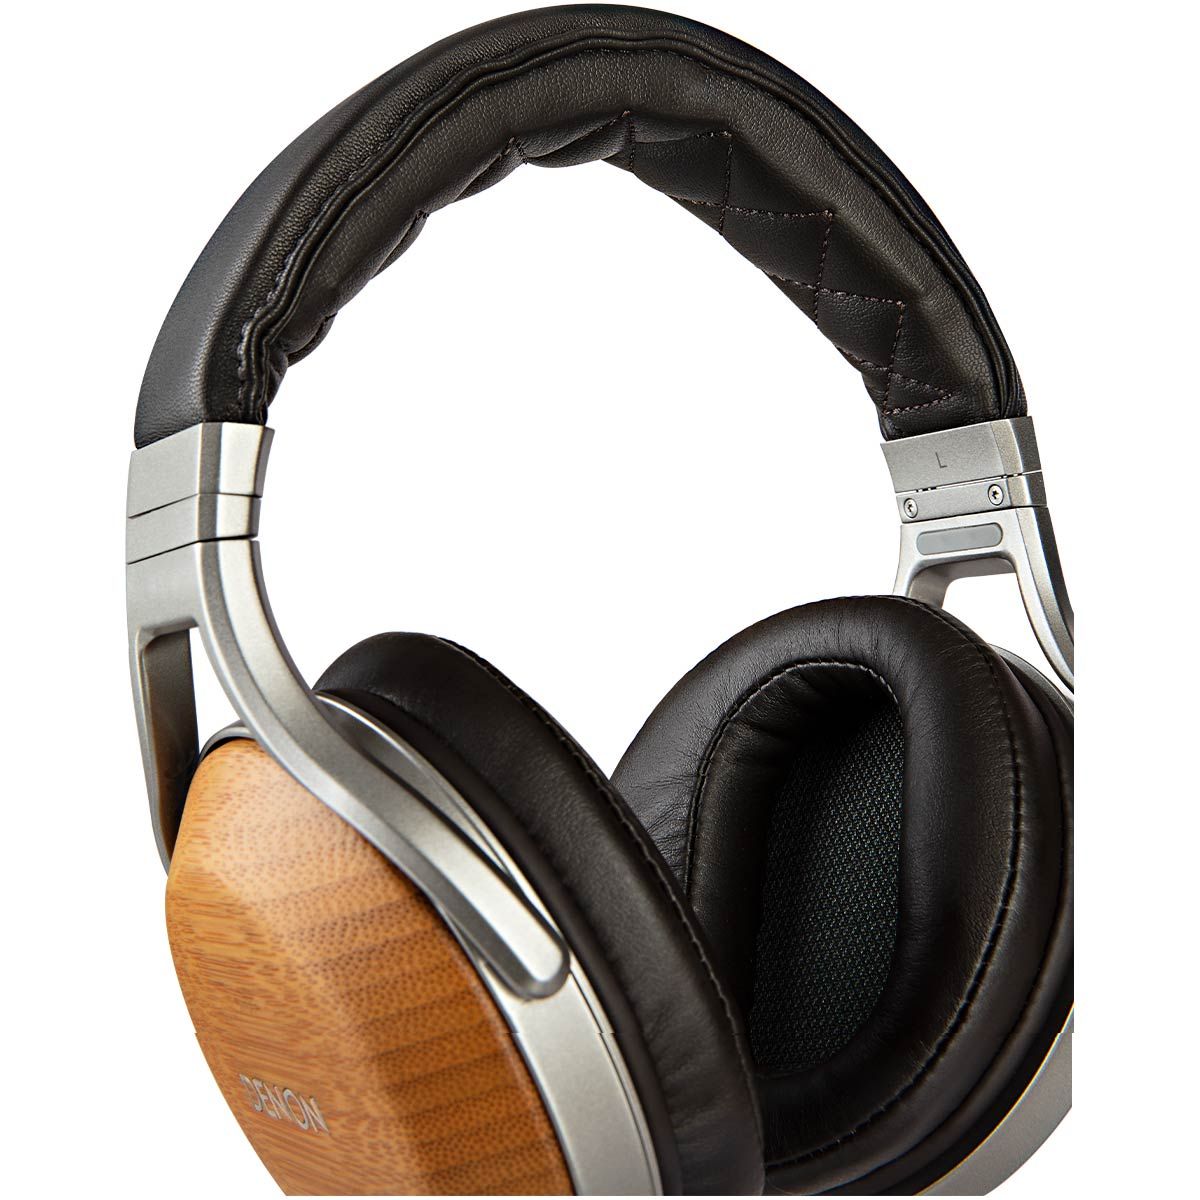 Denon AH-D9200 Bamboo Over-Ear Premium Headphones - angled view